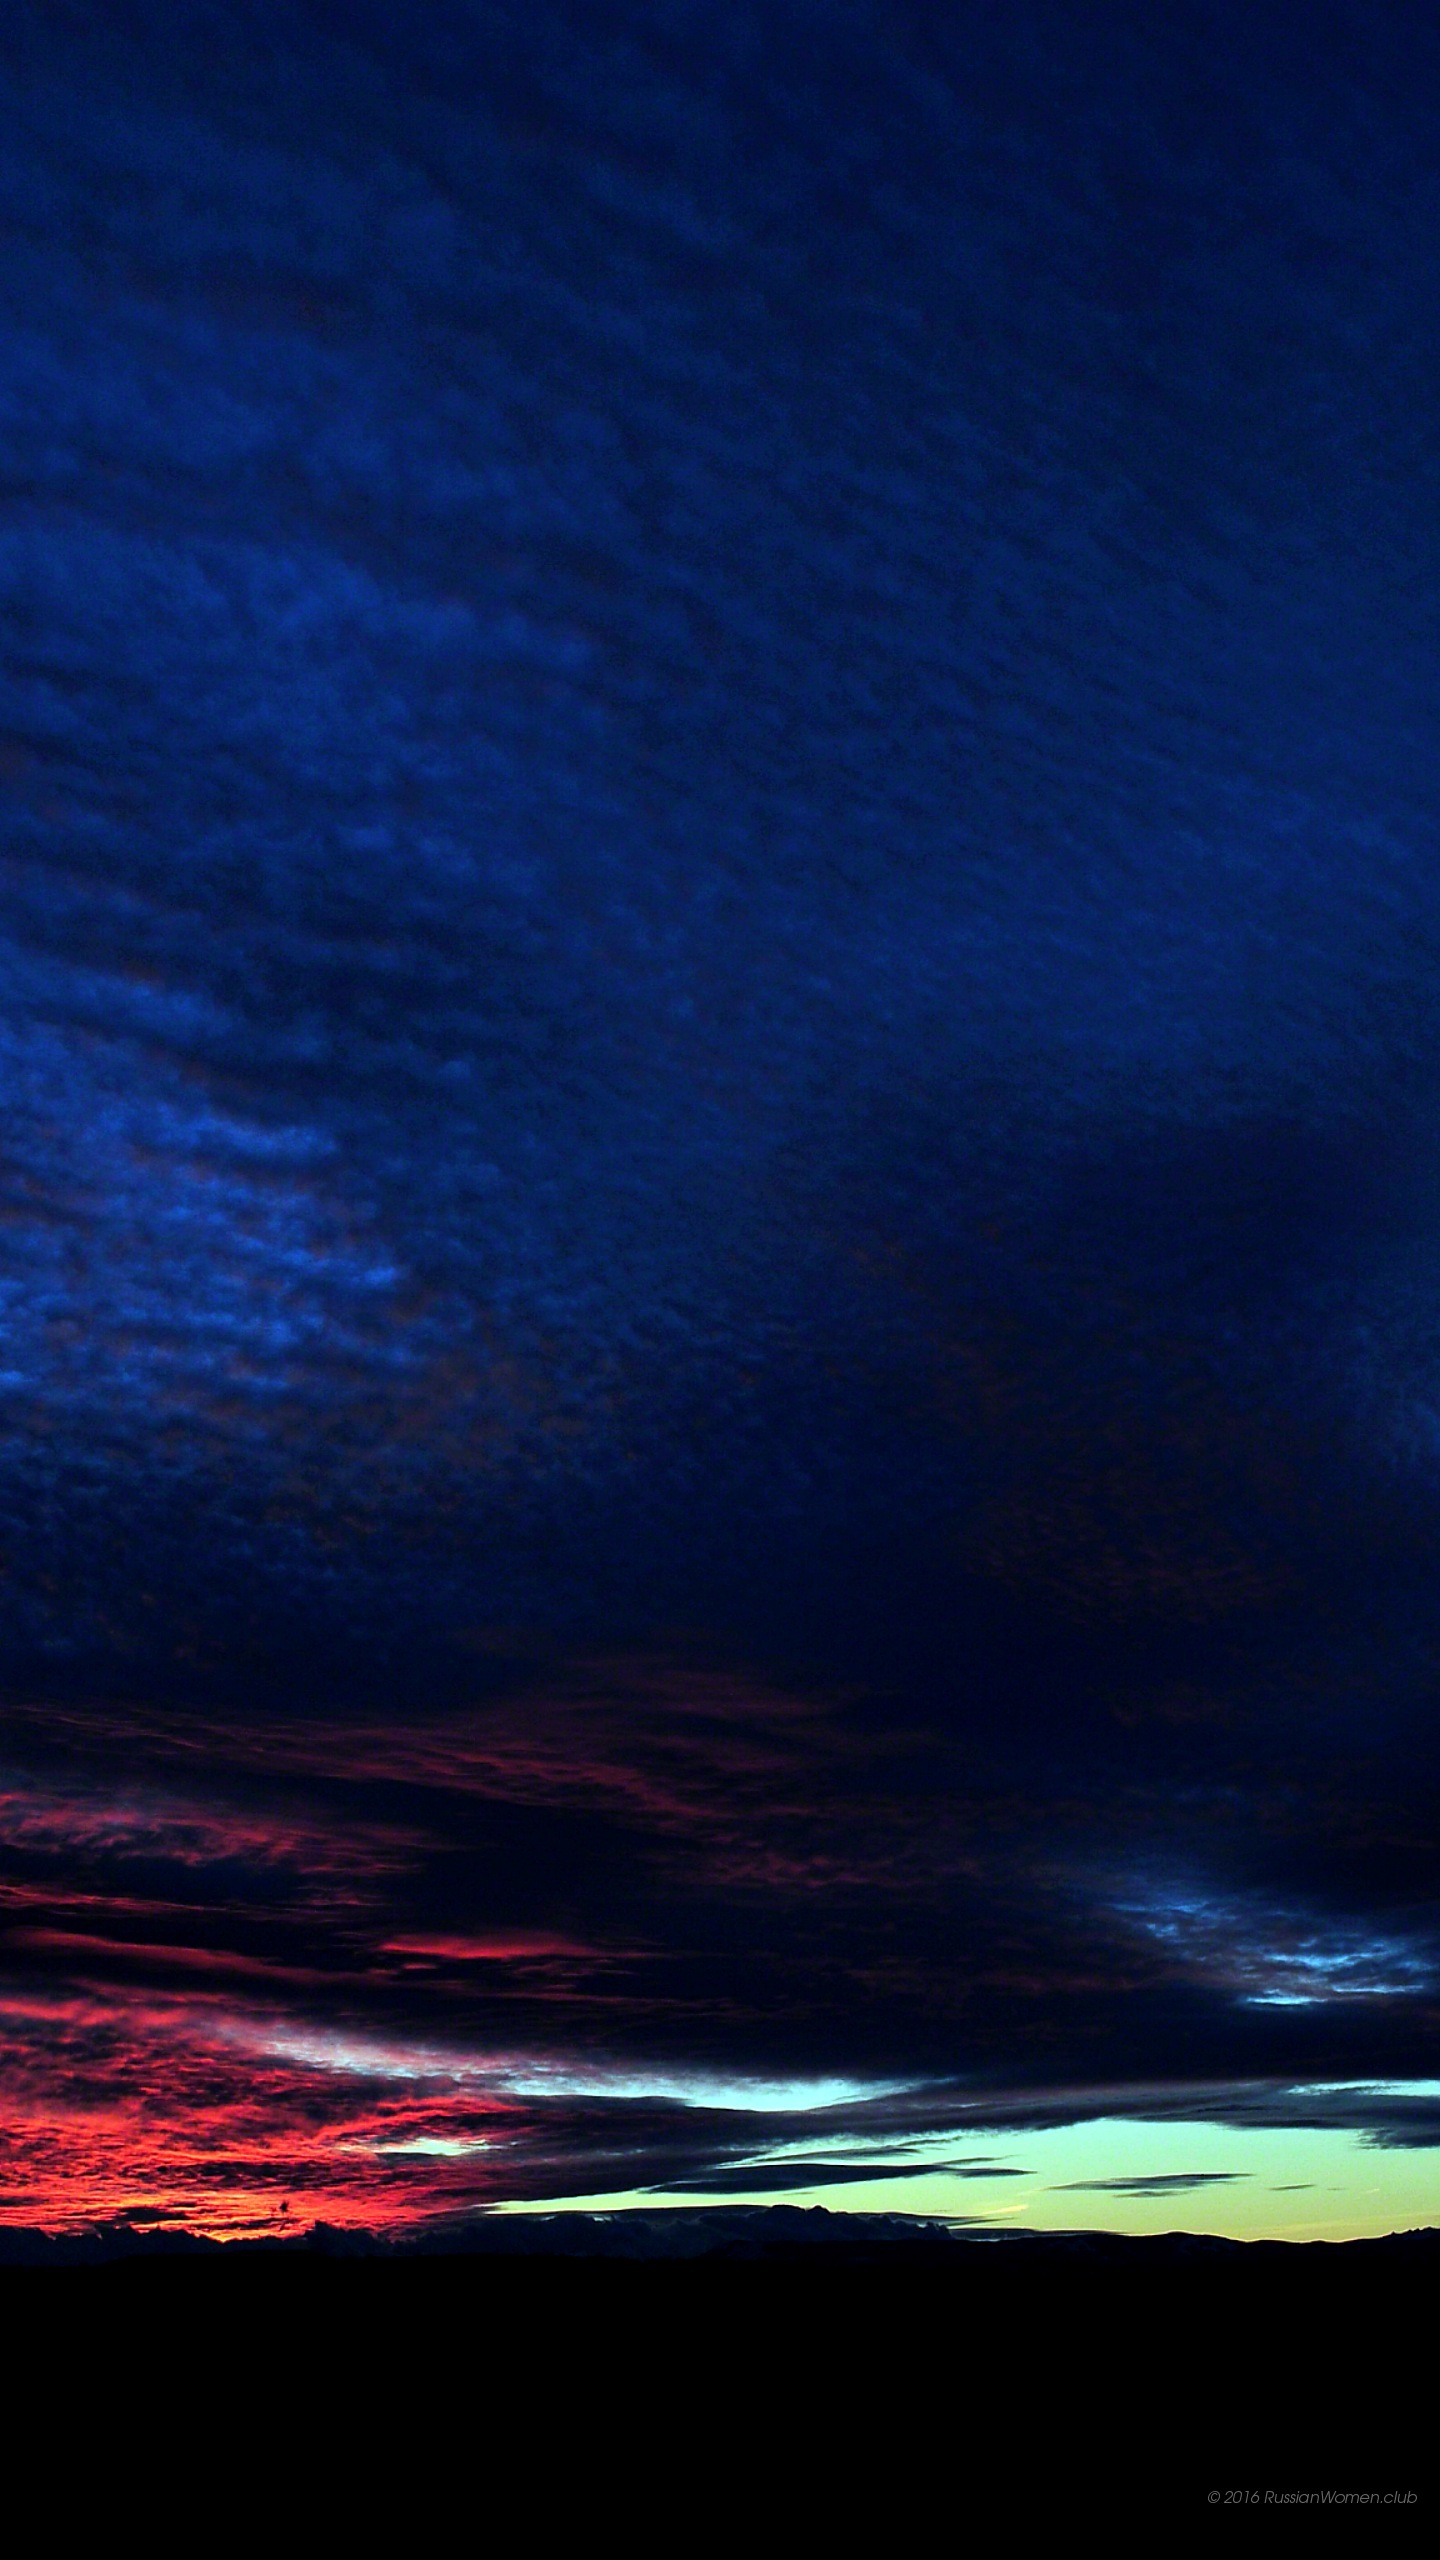 oppo f1壁紙hd,空,青い,地平線,雲,雰囲気